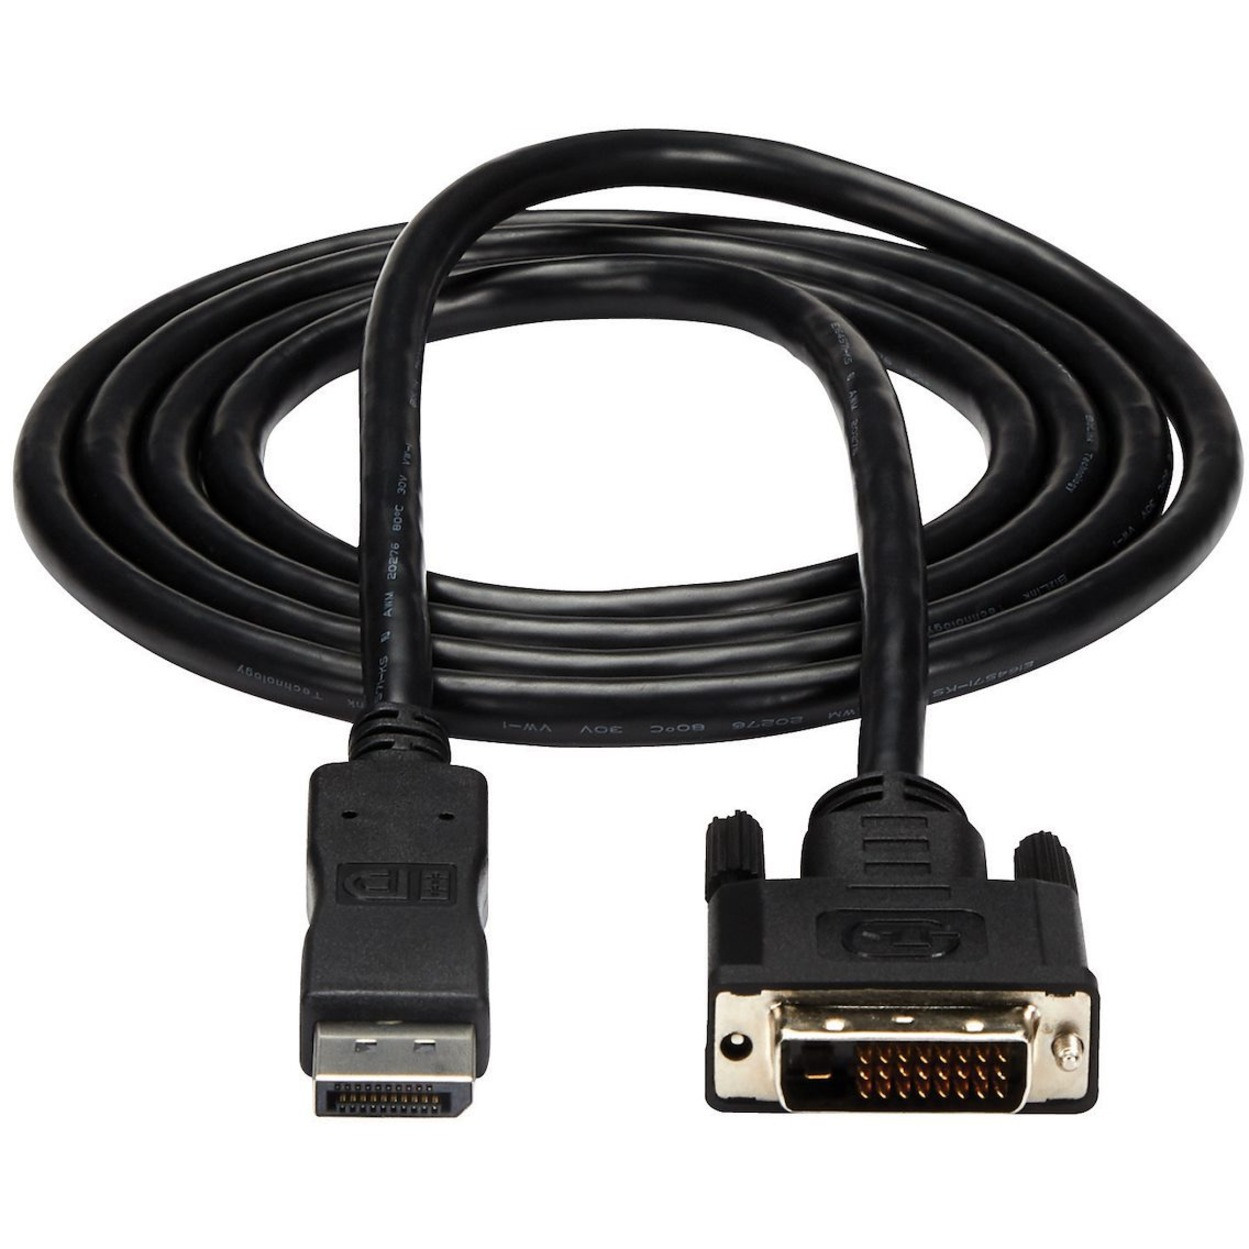 StarTech.com Adaptateur HDMI vers DVI-D - Convertisseur HDMI DVI